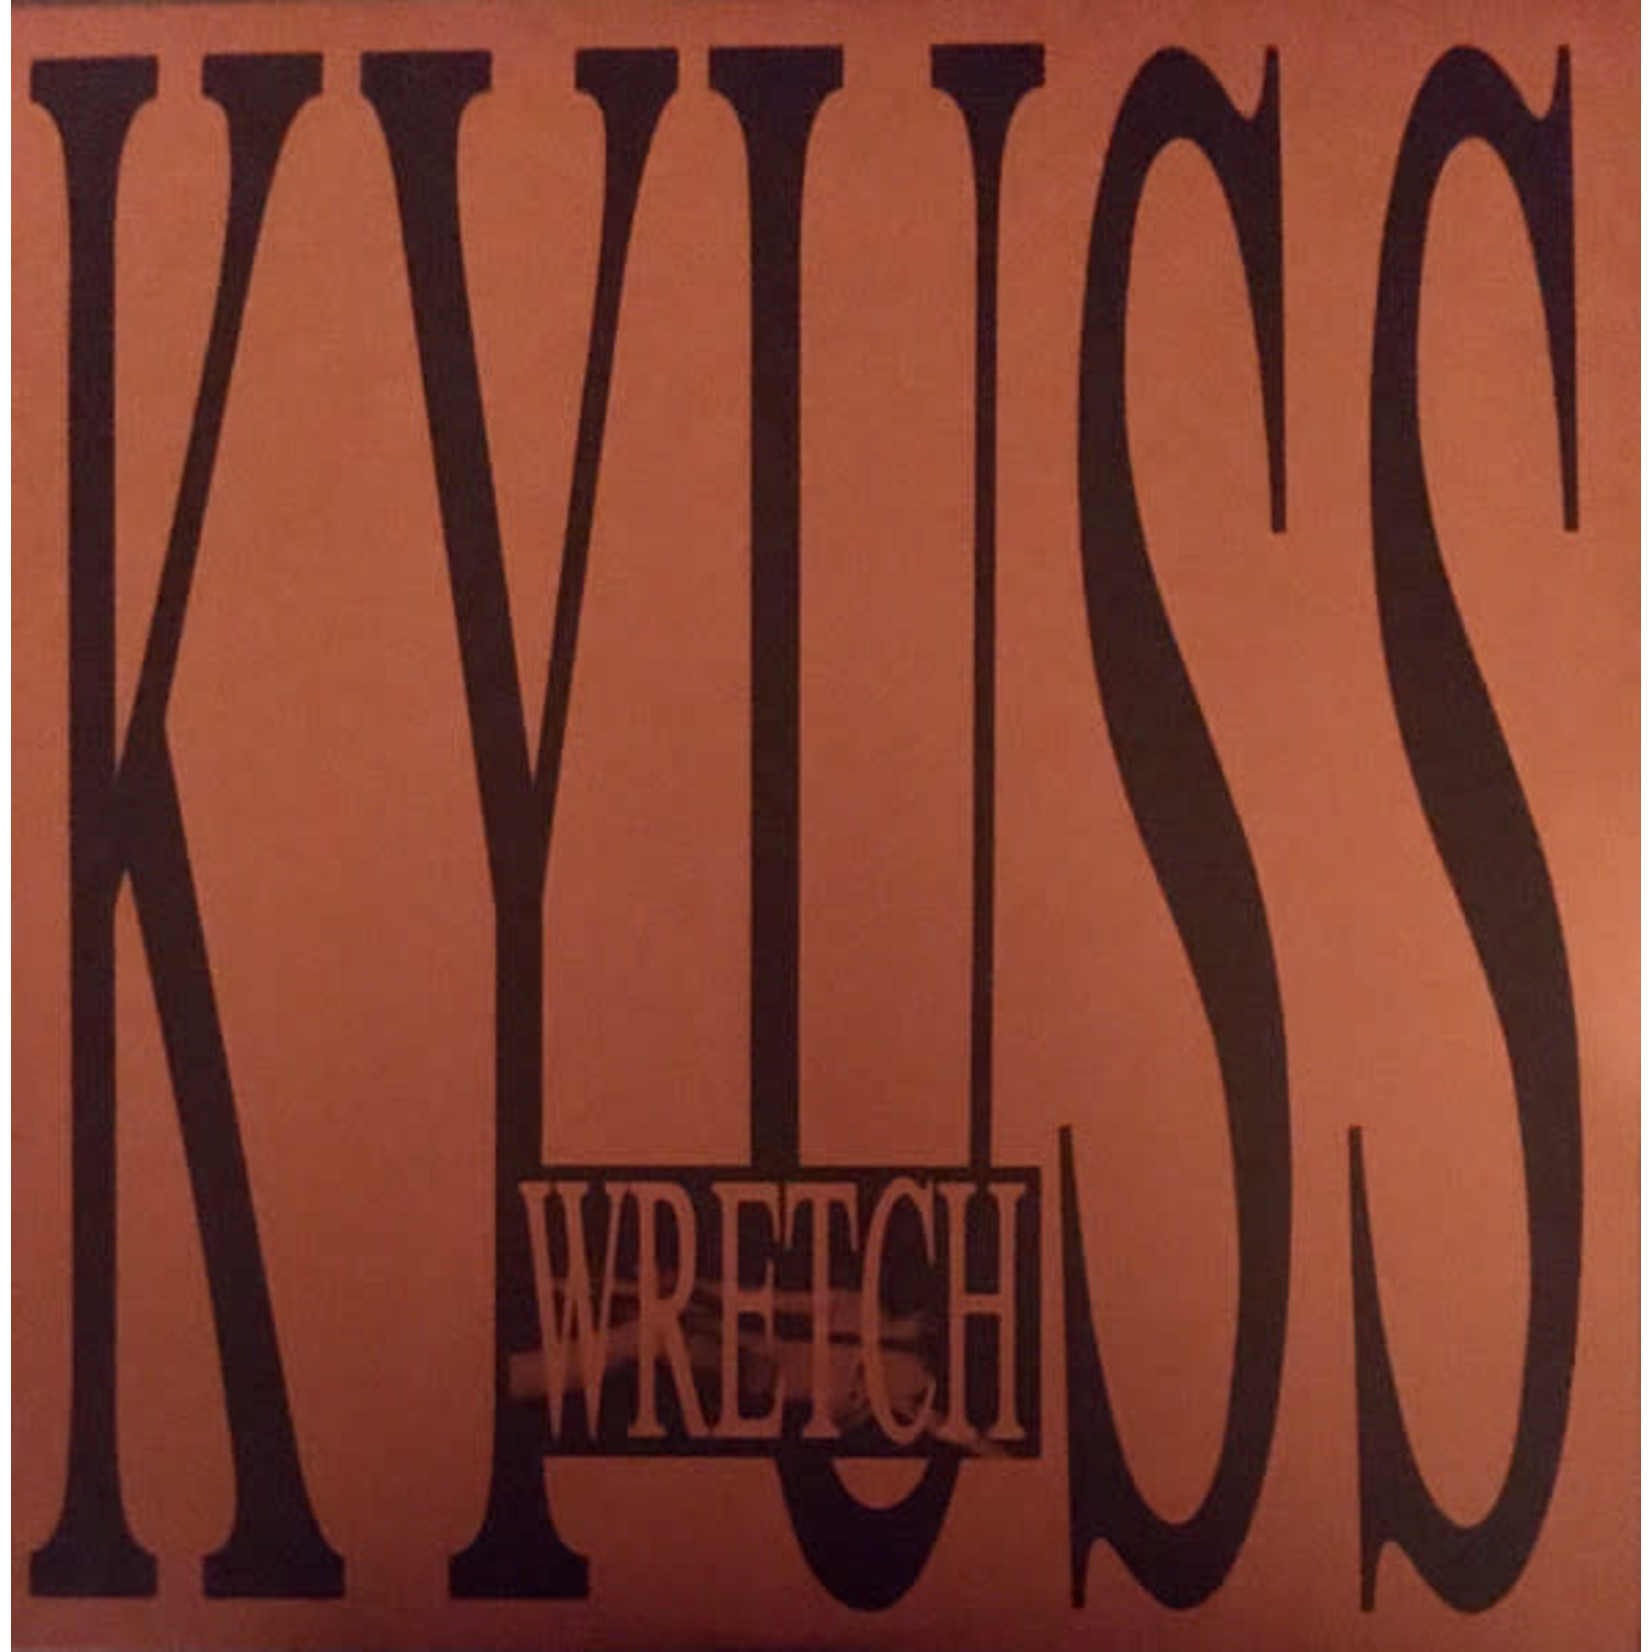 Rhino Kyuss - Wretch (2LP)